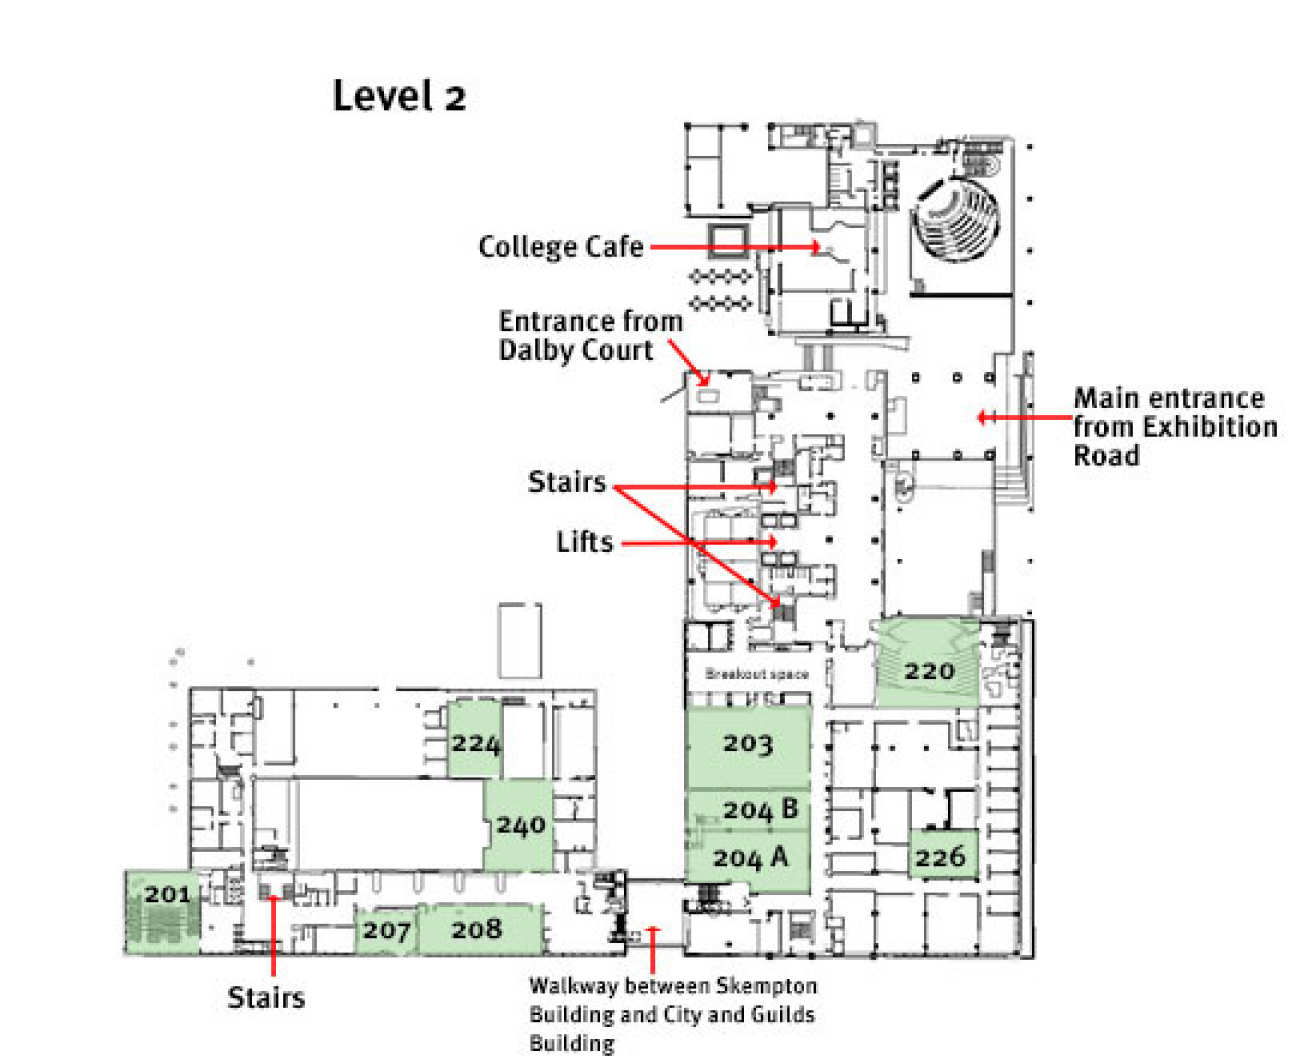 Floorplan of Level 2 Skempton and City & Guild Buildings